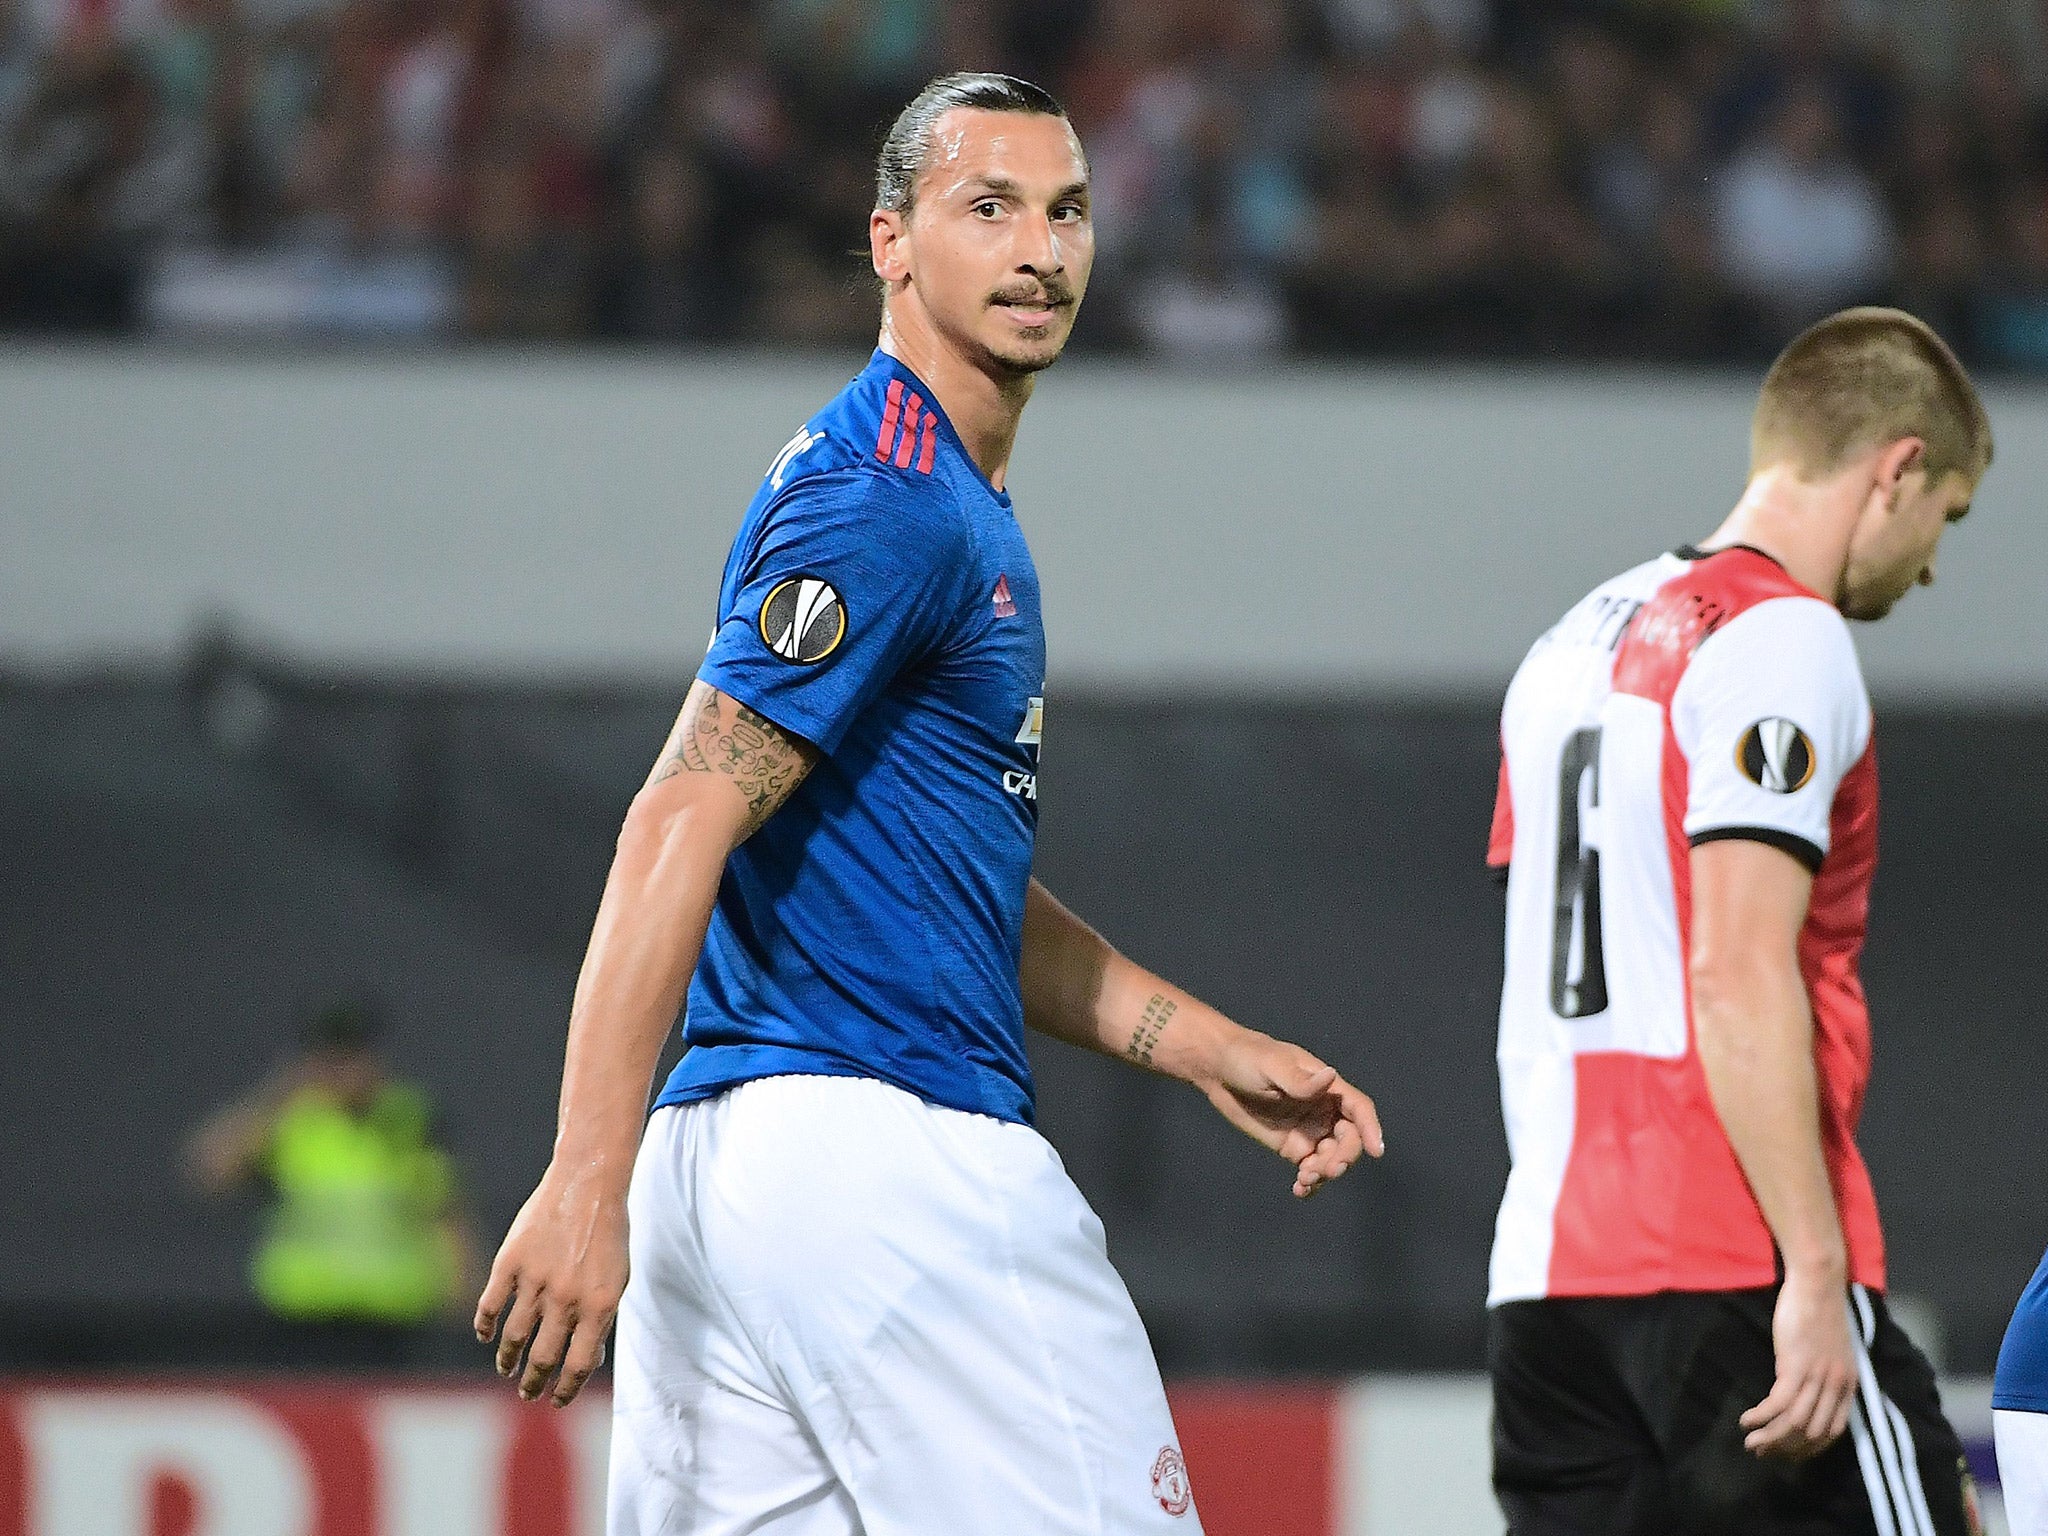 Mino Raiola claims Zlatan Ibrahimovic wanted to end his career at Napoli, not Manchester United